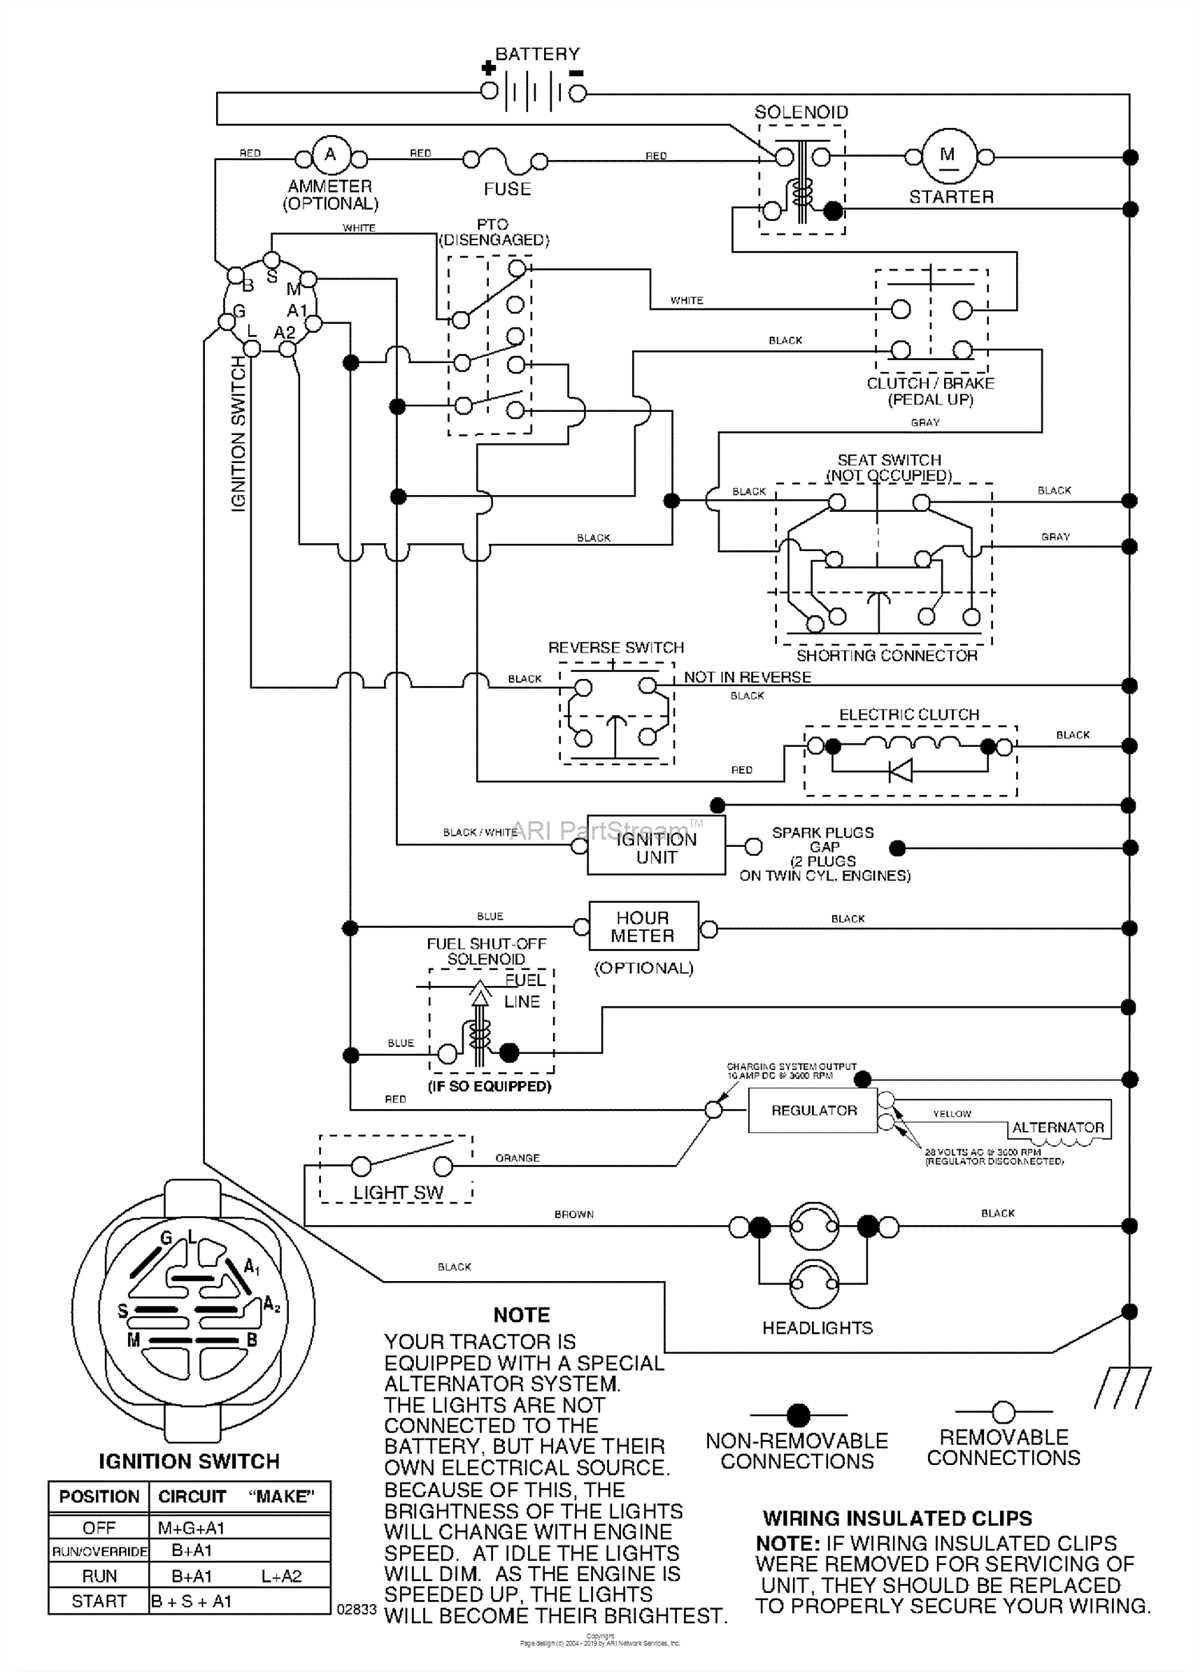 Huskee Lawn Mower: Wiring Diagram Guide